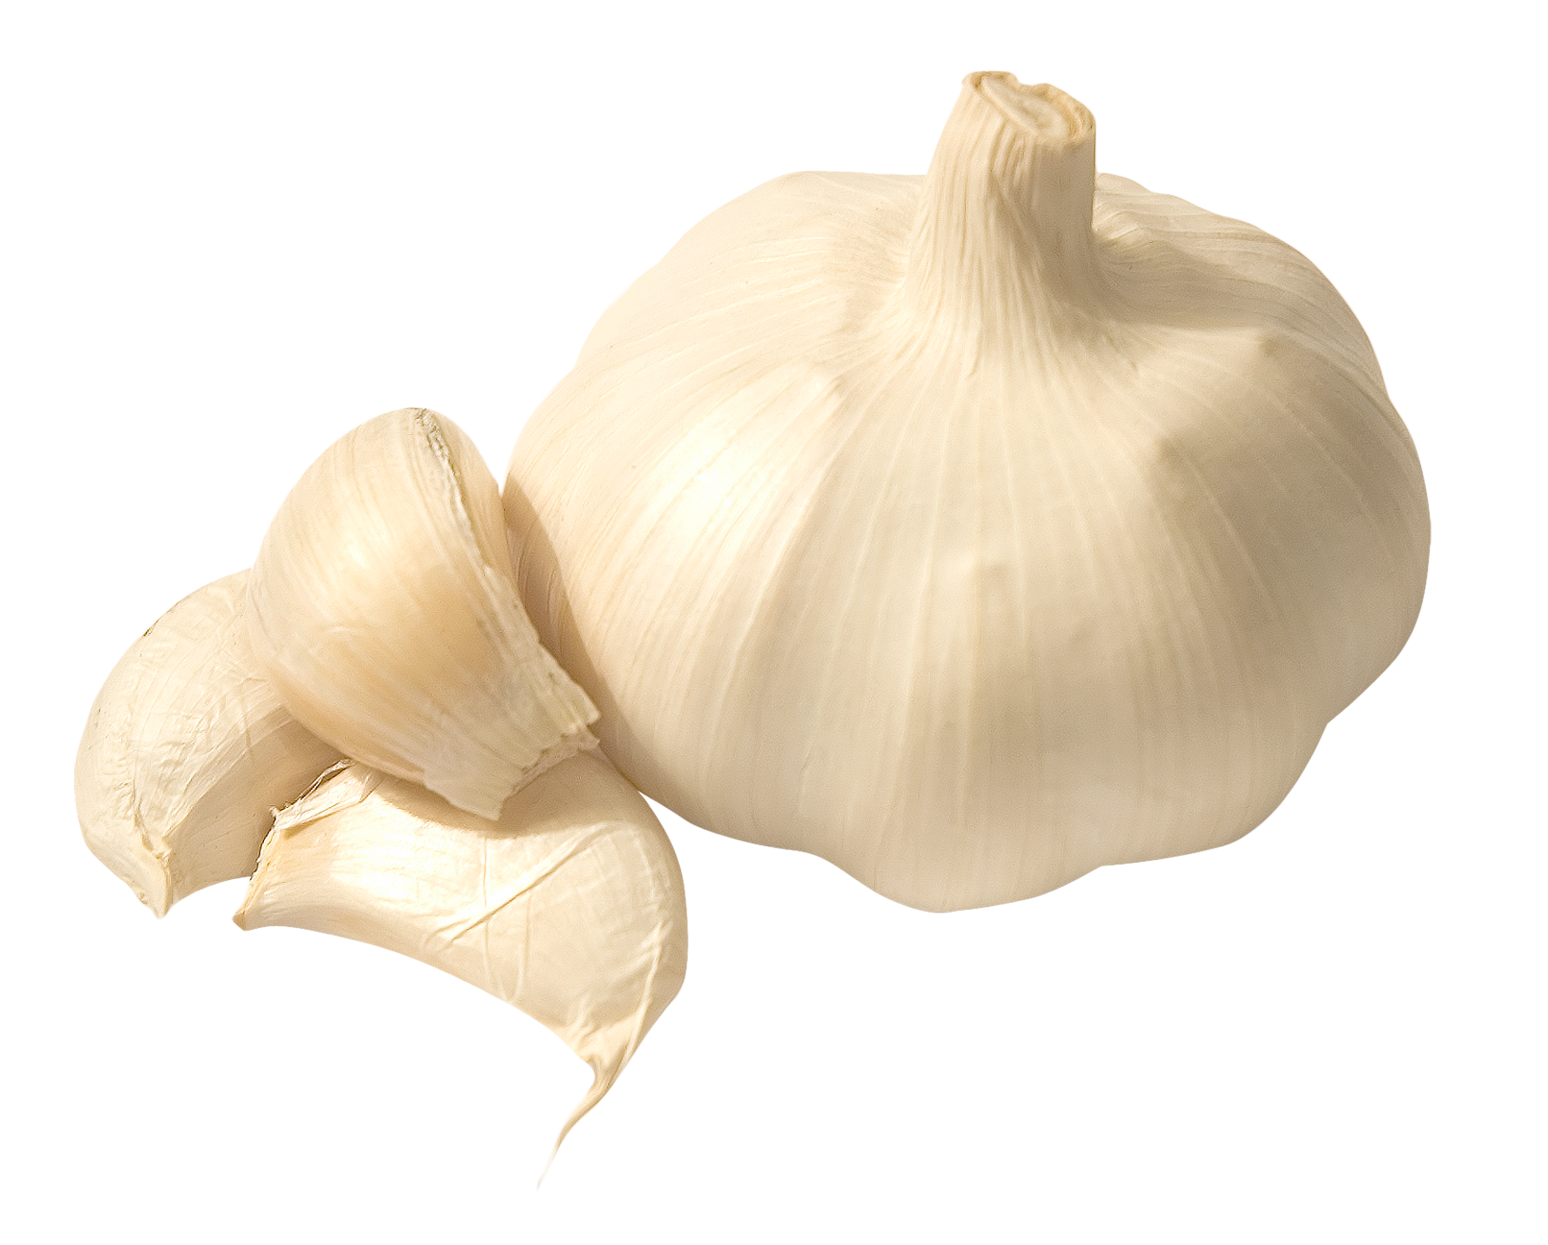 A Garlic Cloves And A Clove Of Garlic